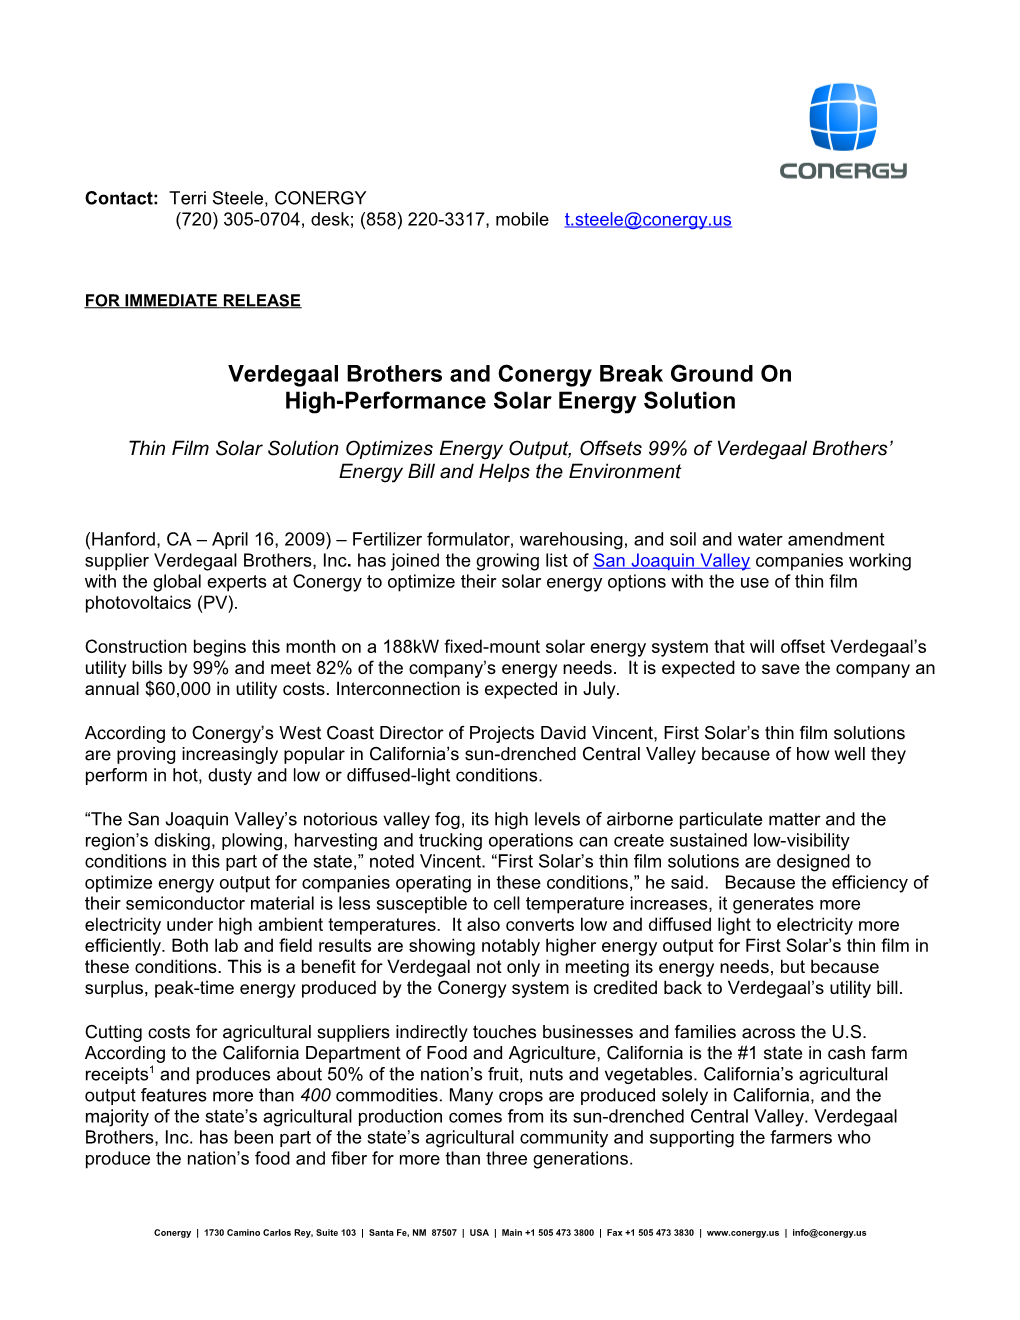 Verdegaal Brothers and Conergy Break Ground On